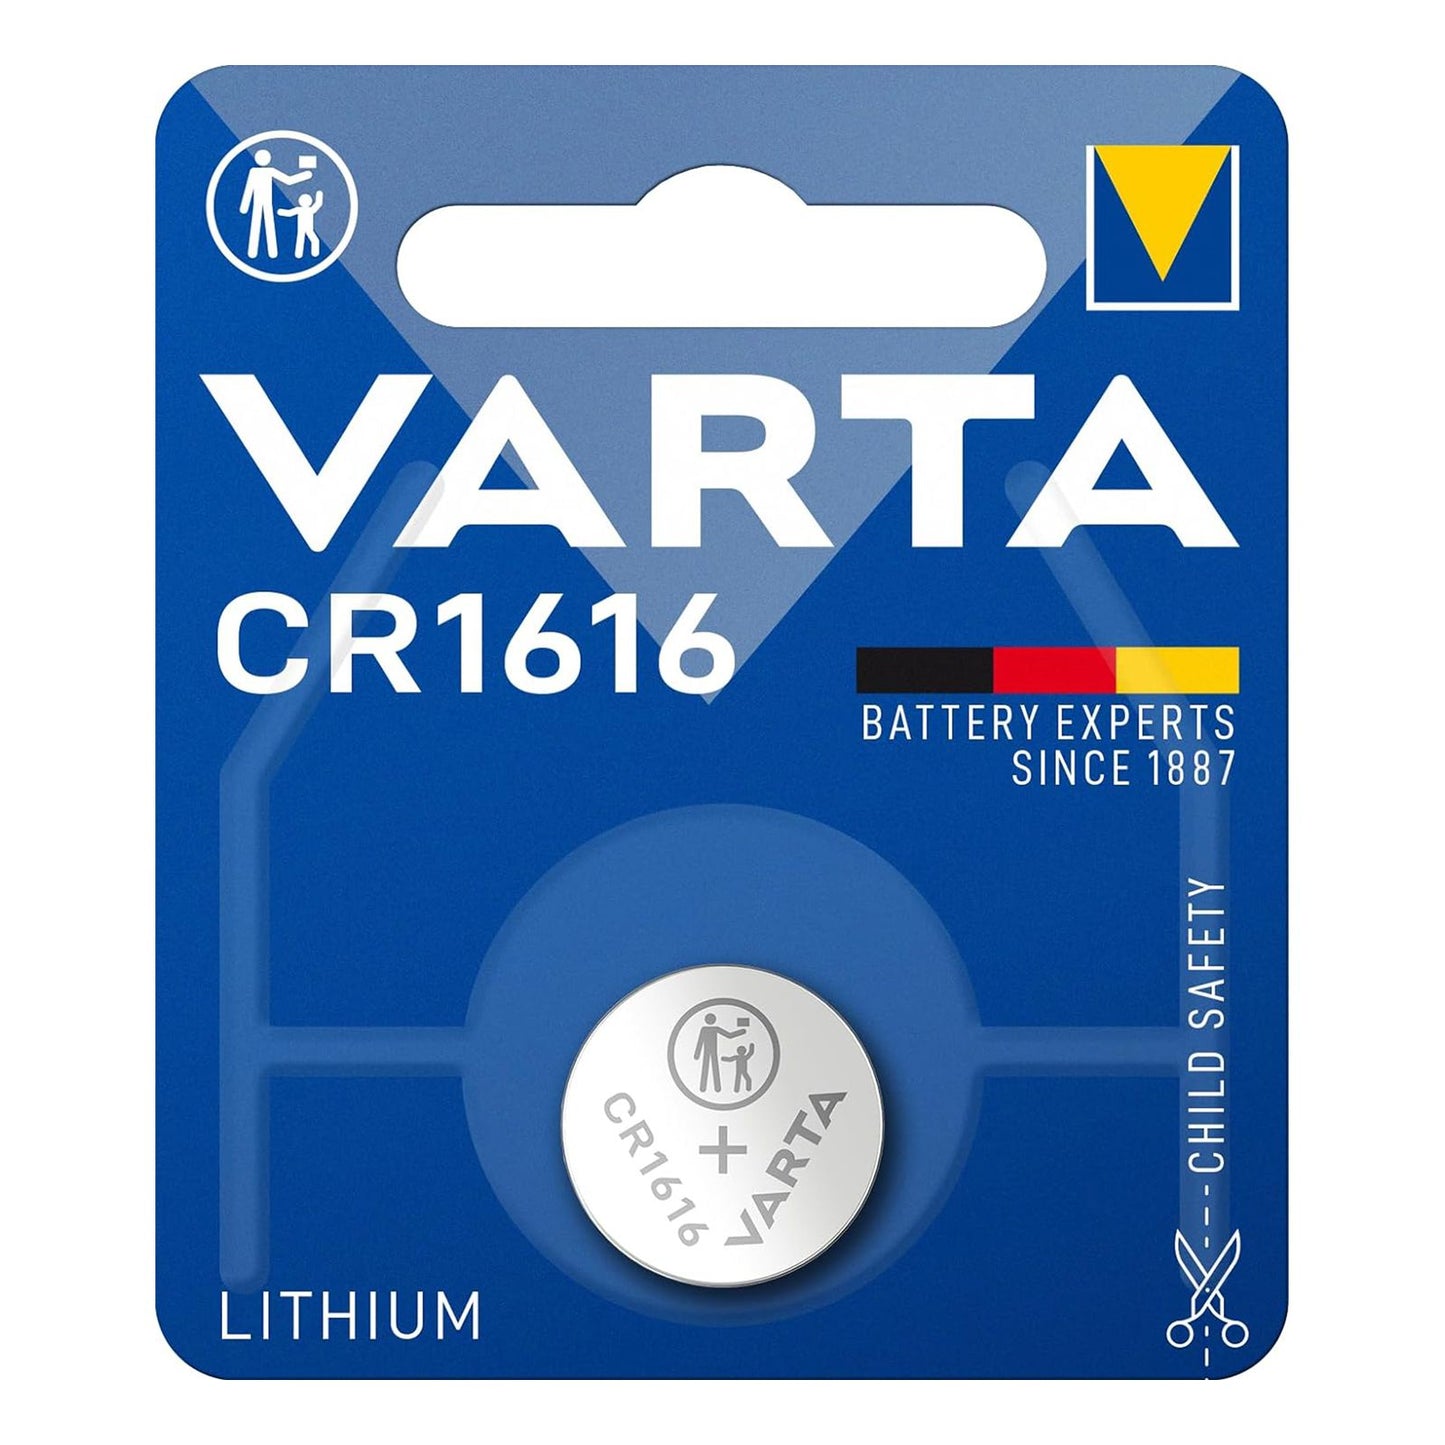 VARTA CR1616 Batteria al litio a bottone 3V, pila piatta, specialistica, diametro 16mm